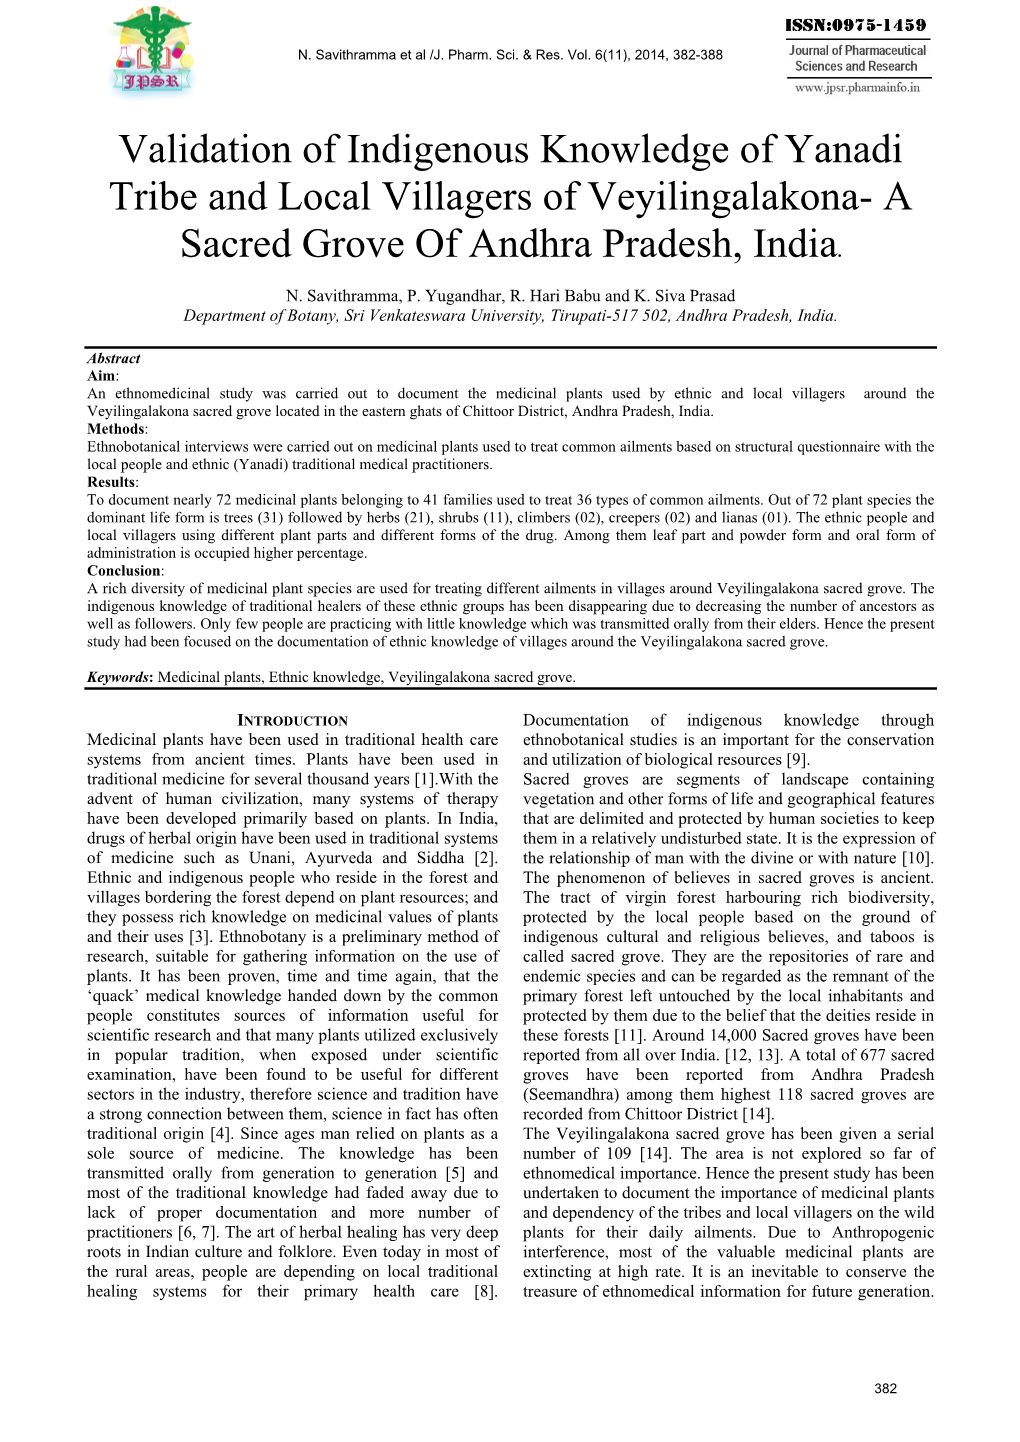 Validation of Indigenous Knowledge of Yanadi Tribe and Local Villagers of Veyilingalakona- a Sacred Grove of Andhra Pradesh